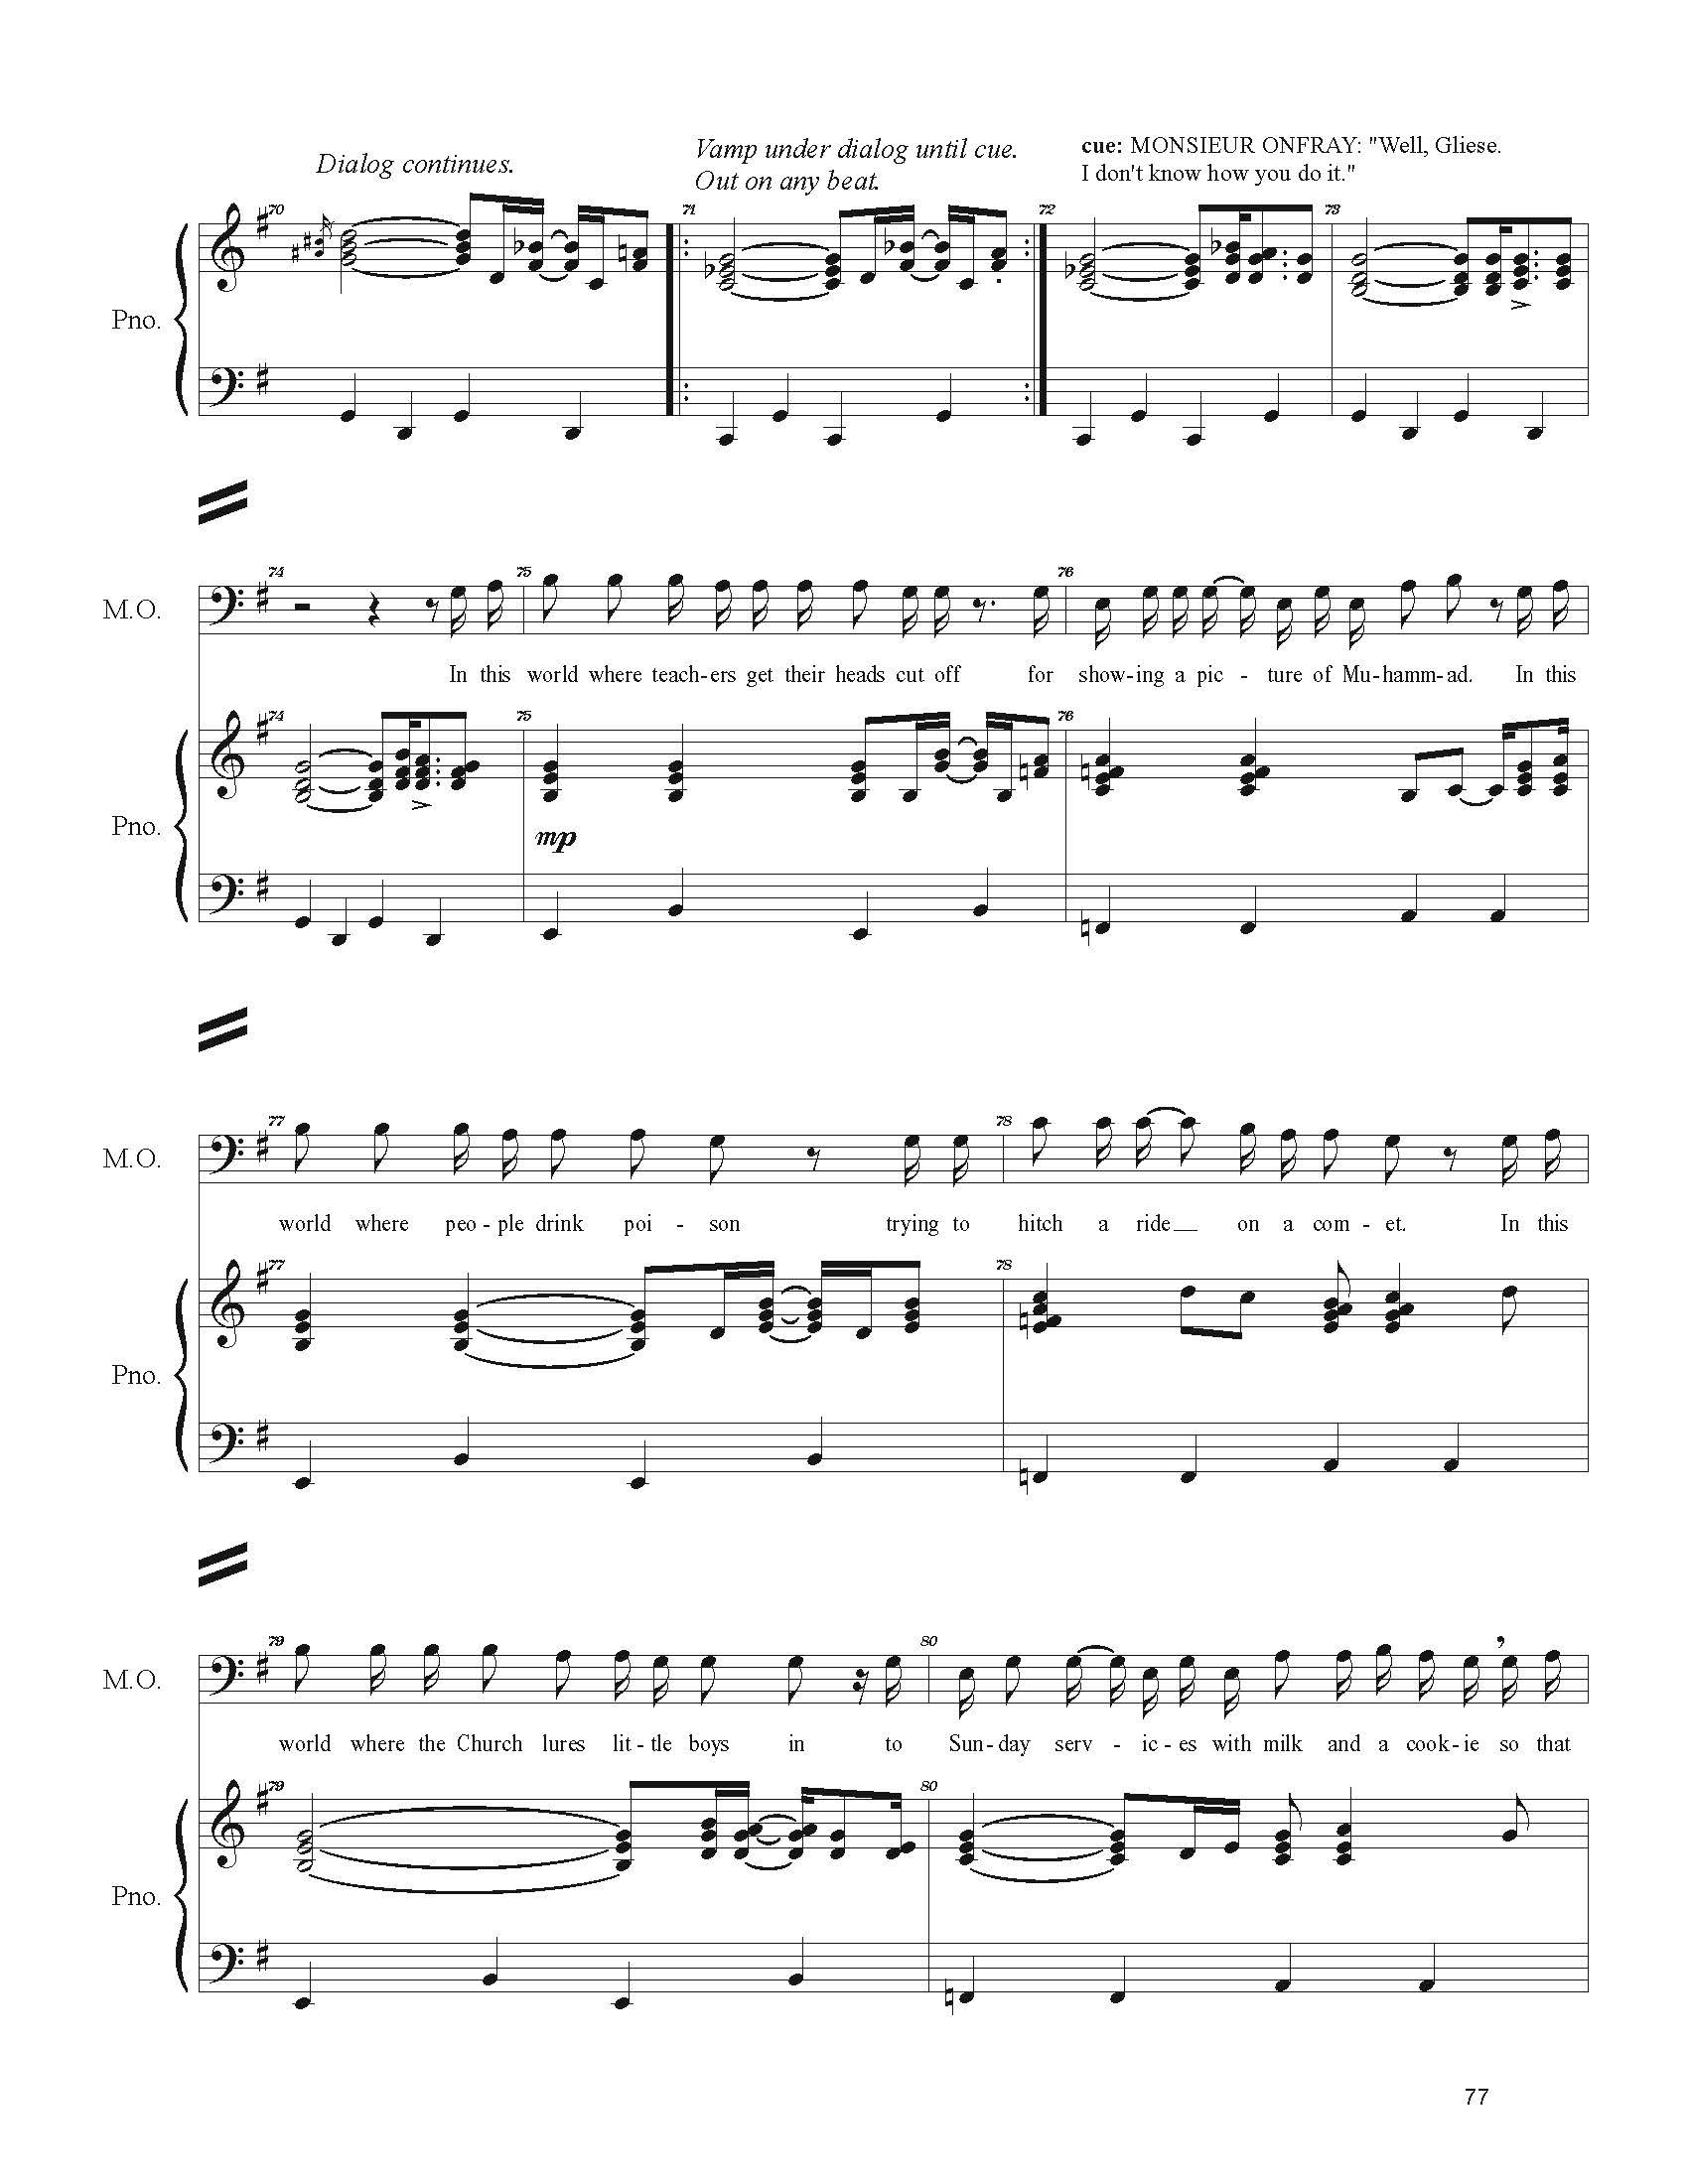 FULL PIANO VOCAL SCORE DRAFT 1 - Score_Page_077.jpg